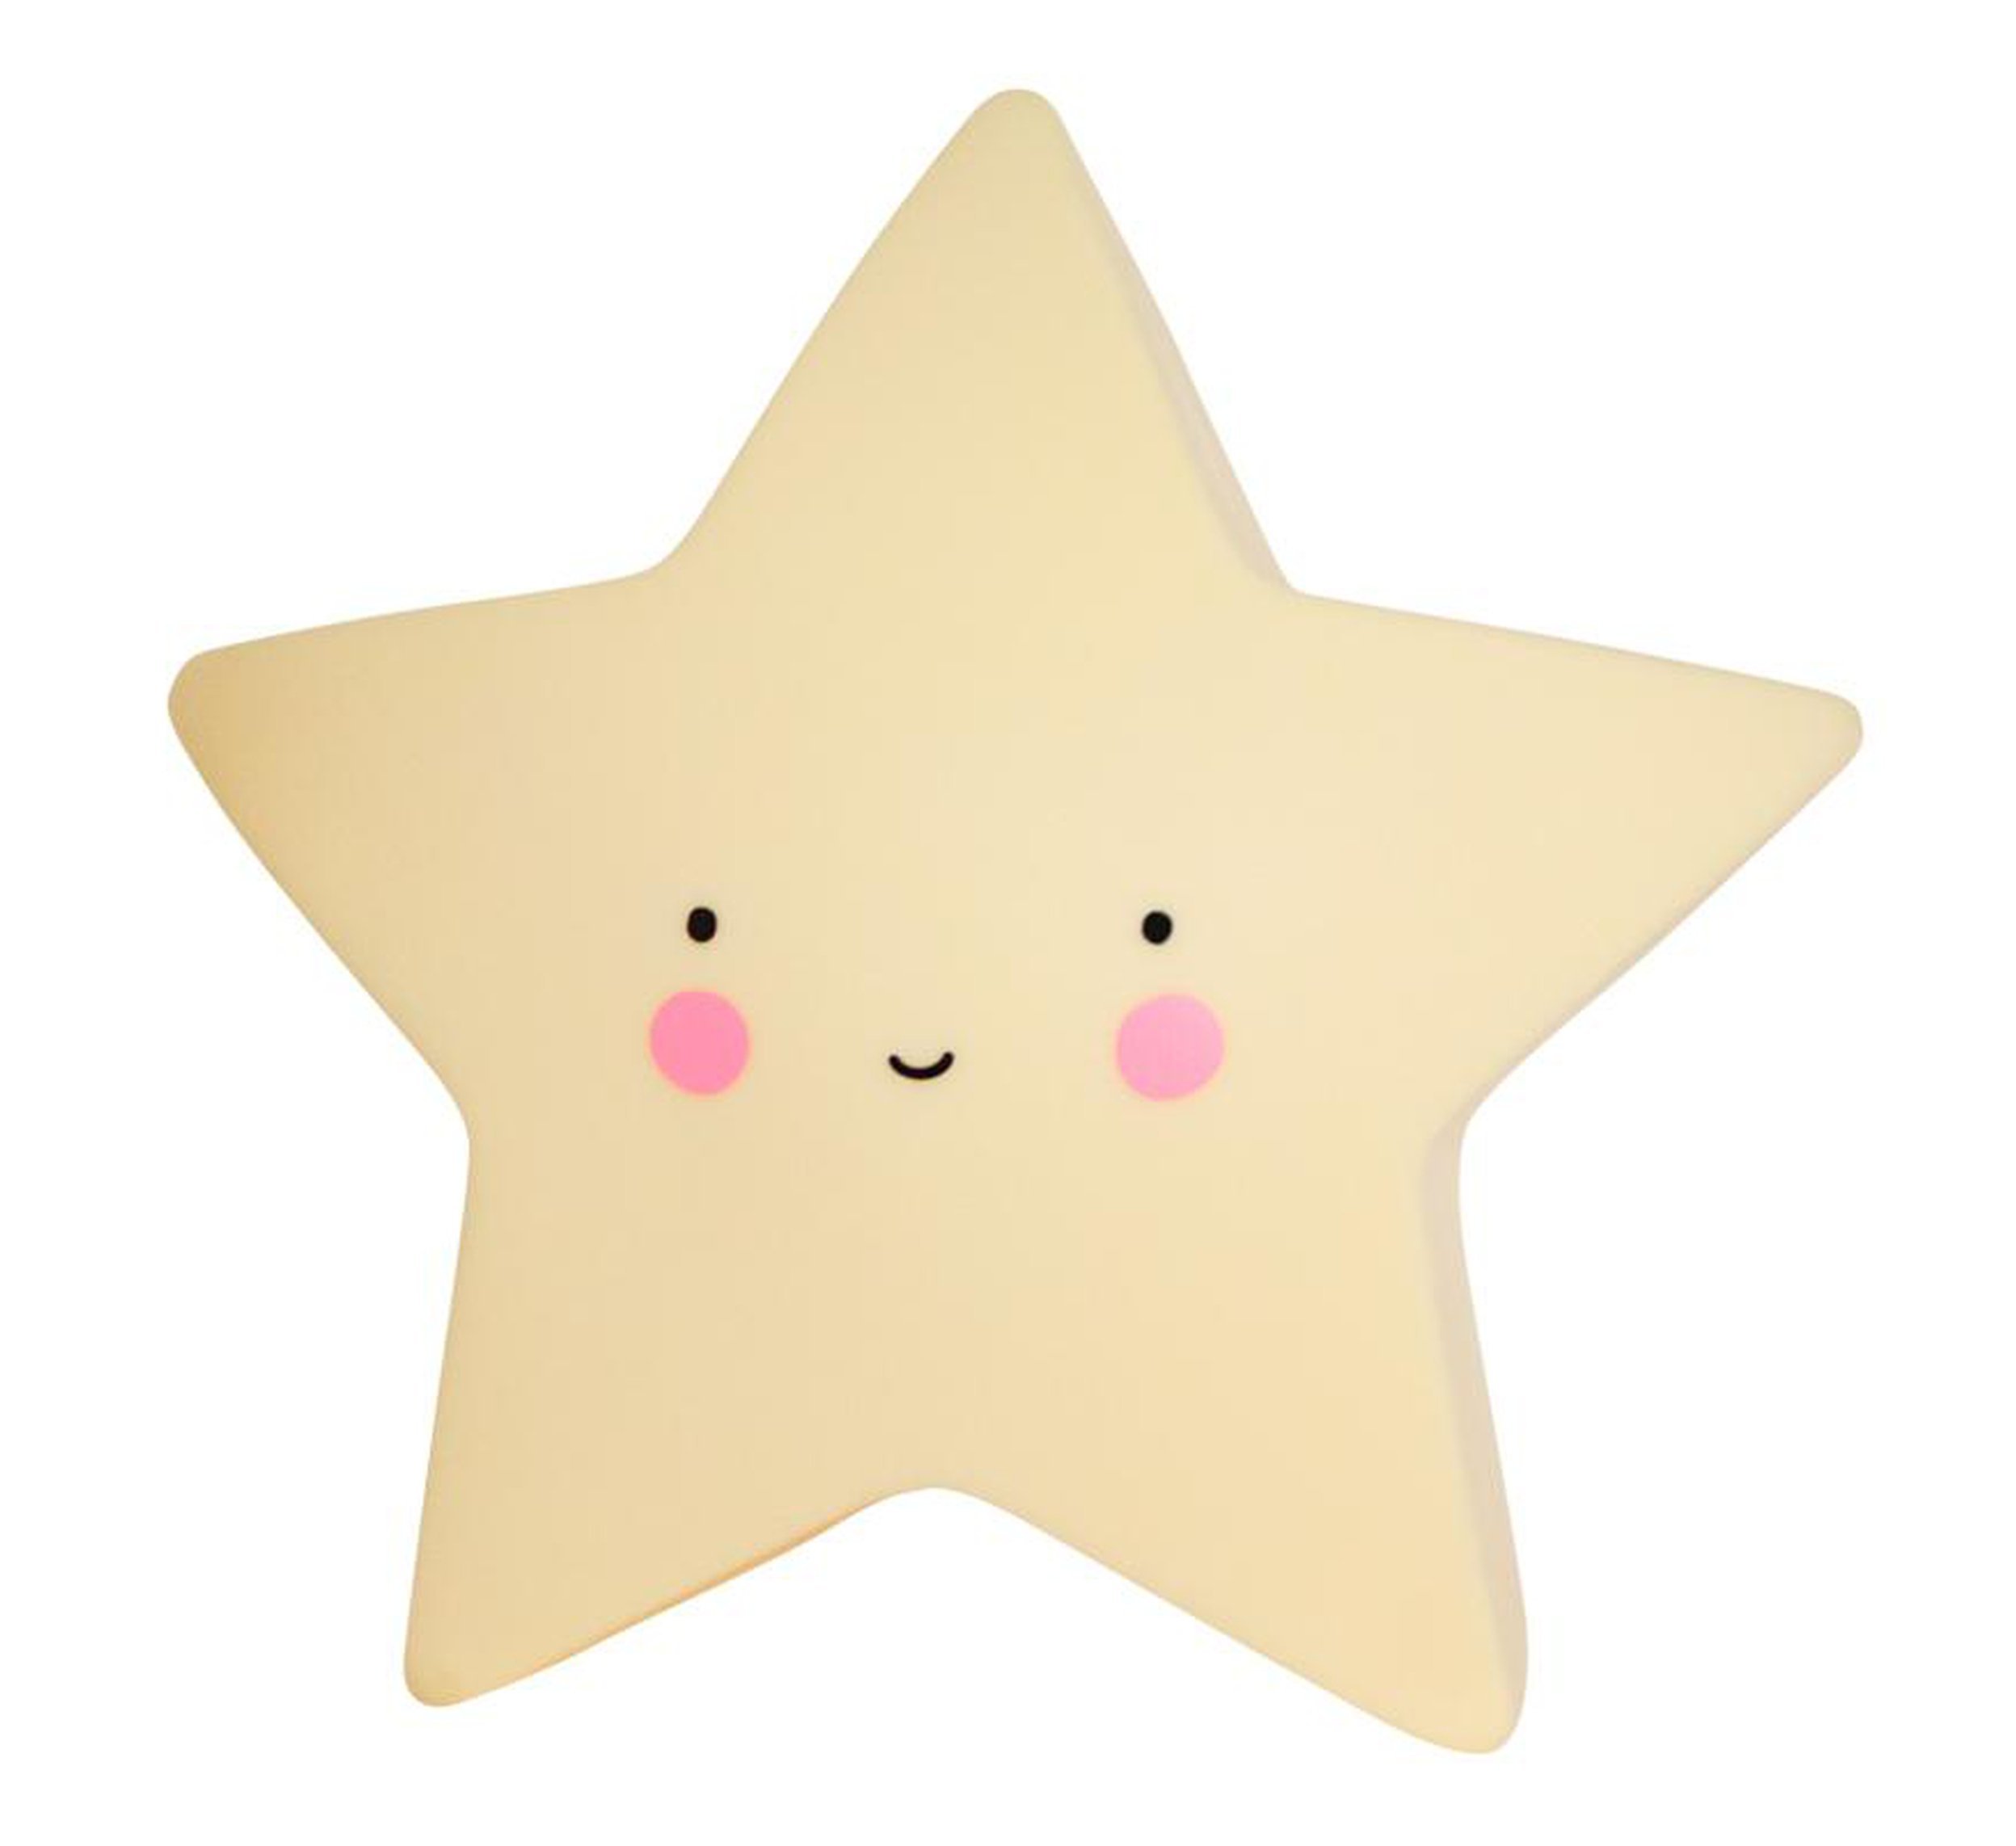 Star Light - Yellow-Light-A Little Lovely Company-jellyfishkids.com.cy